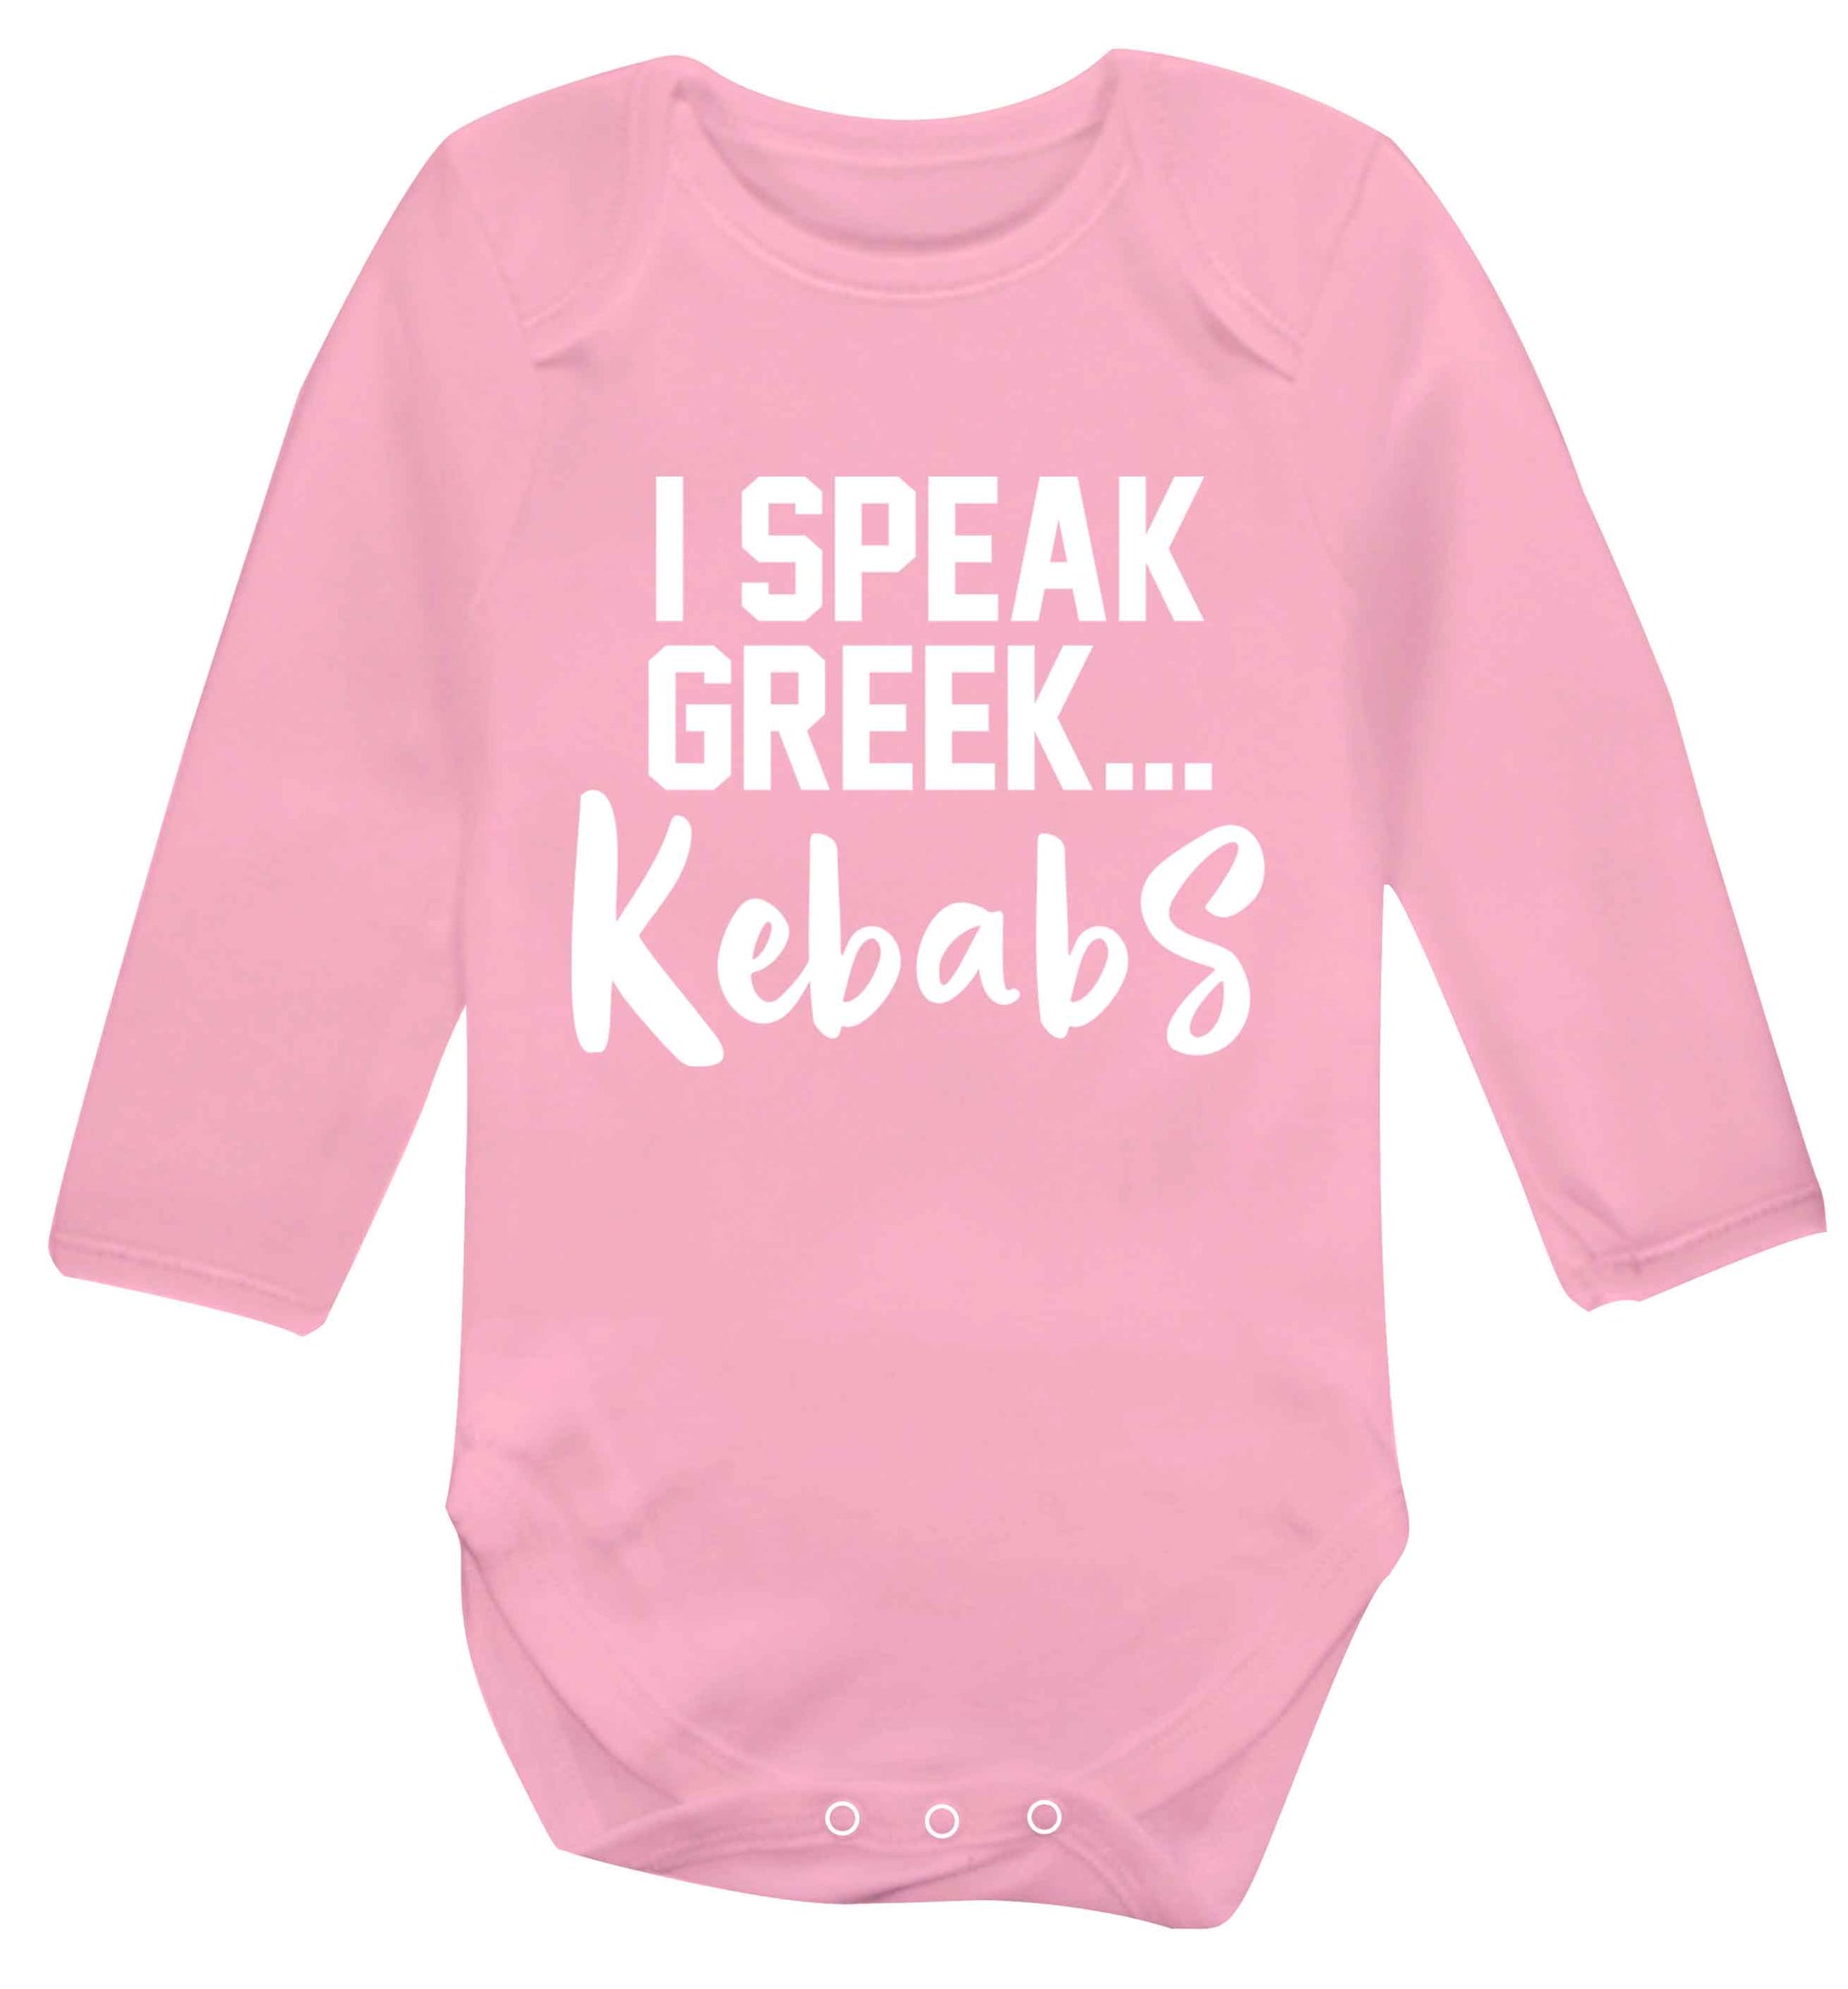 I speak Greek...kebabs Baby Vest long sleeved pale pink 6-12 months